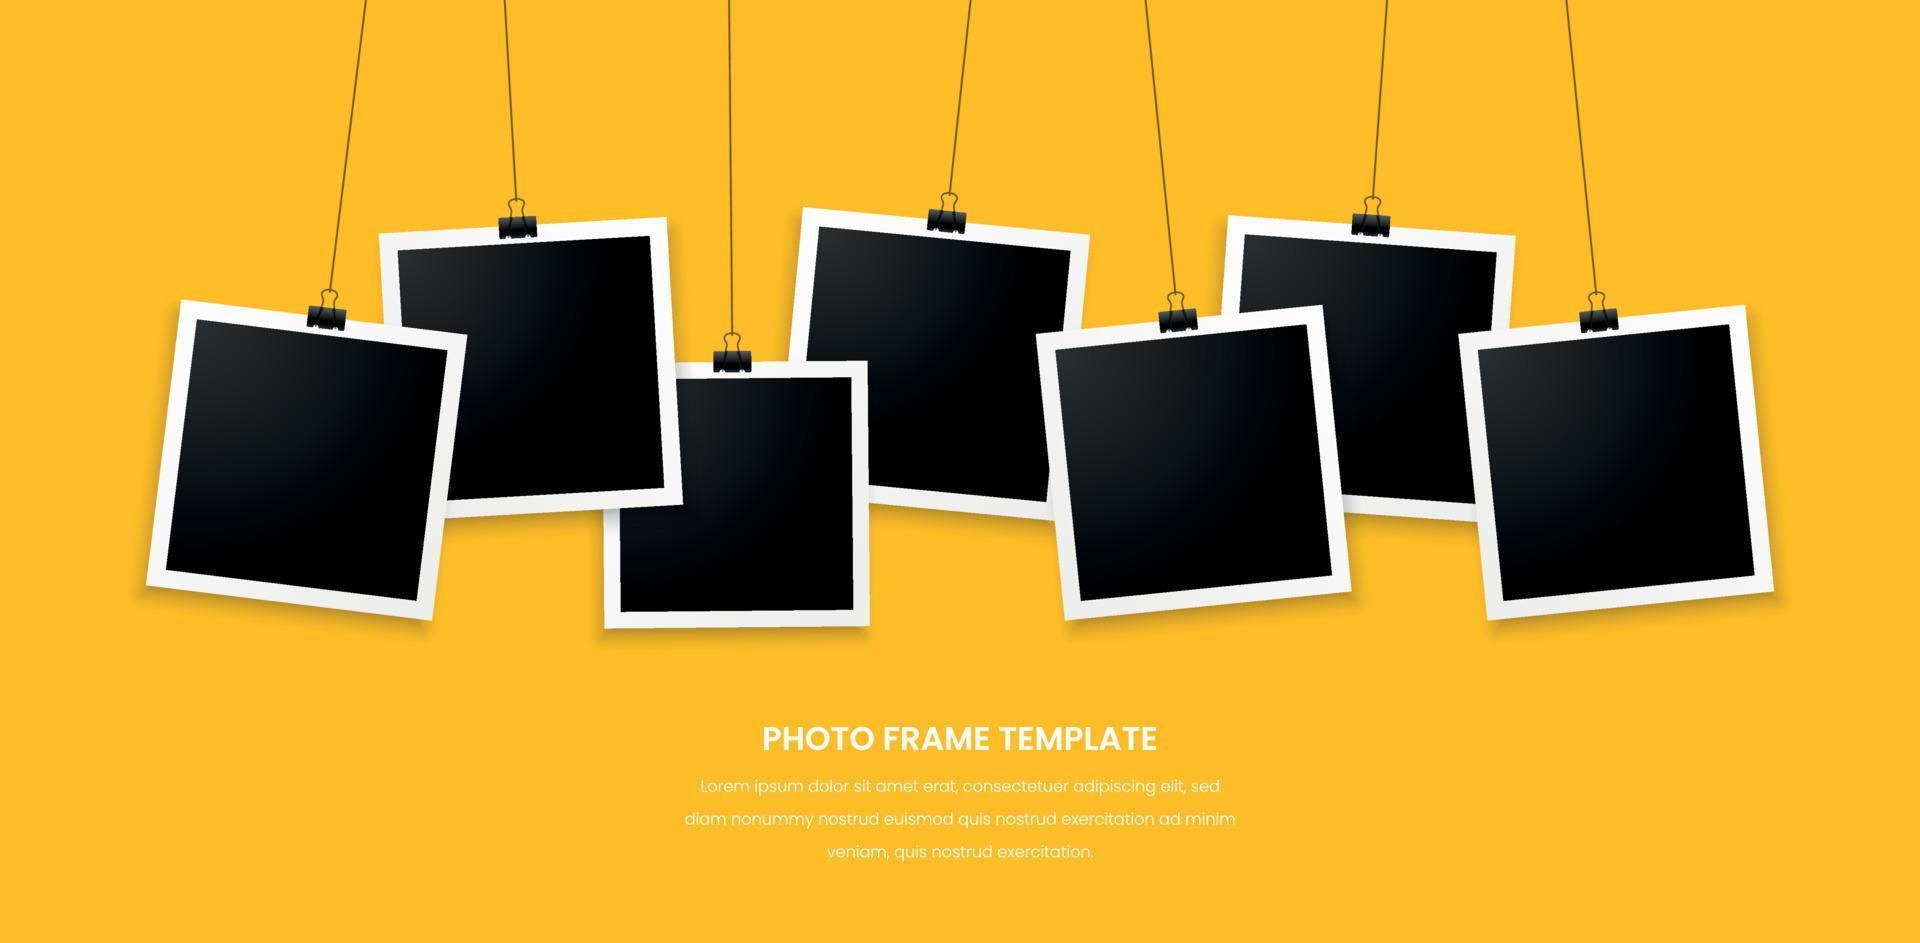 sju fotoramar på gul bakgrundsdesign vektor